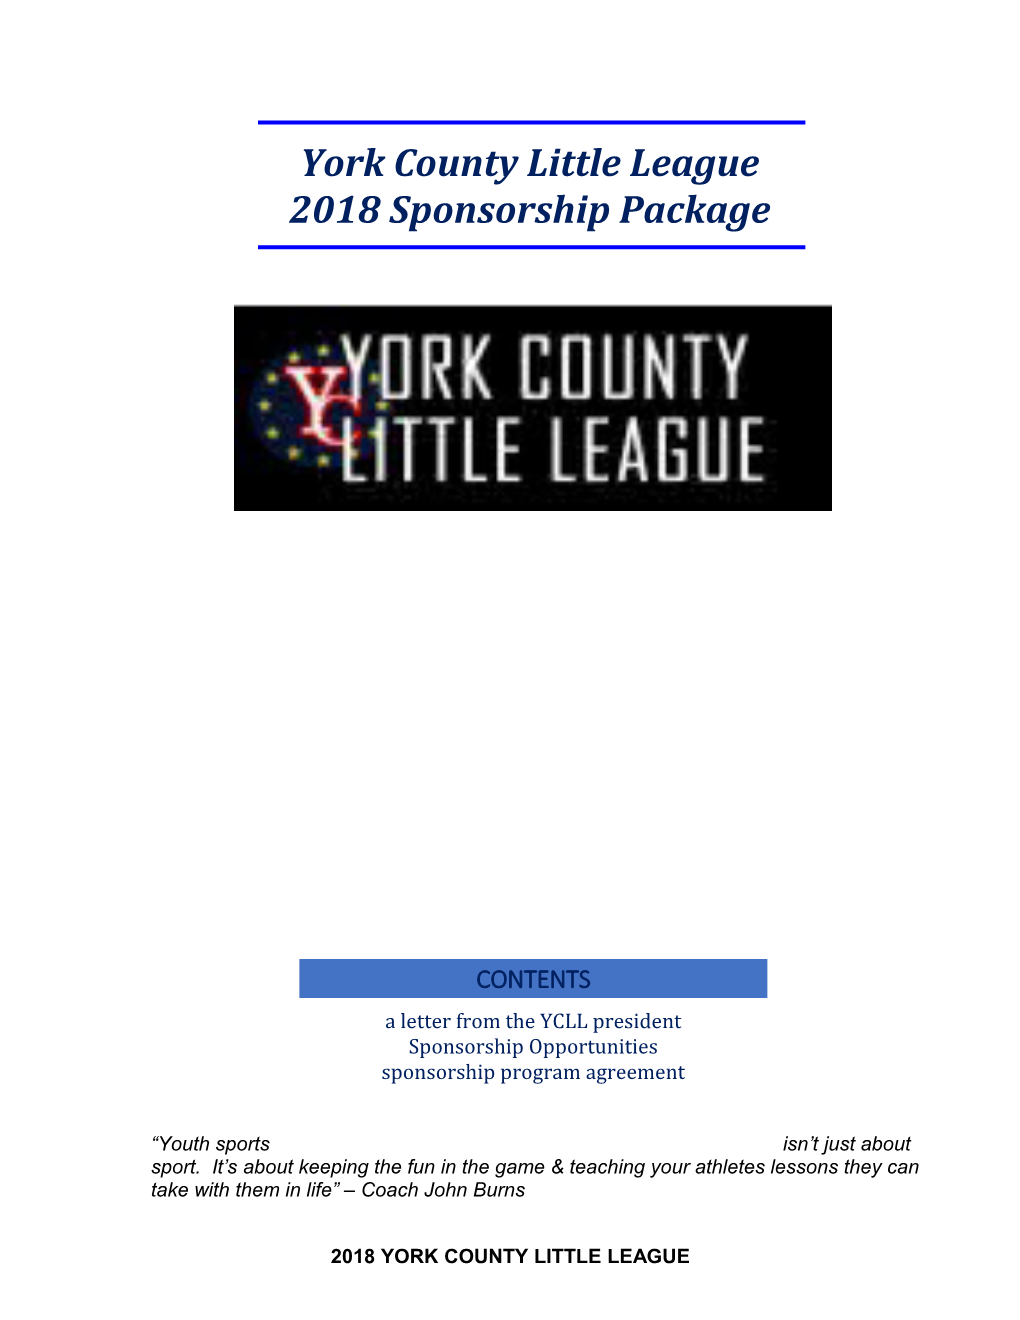 2018 York County Little League